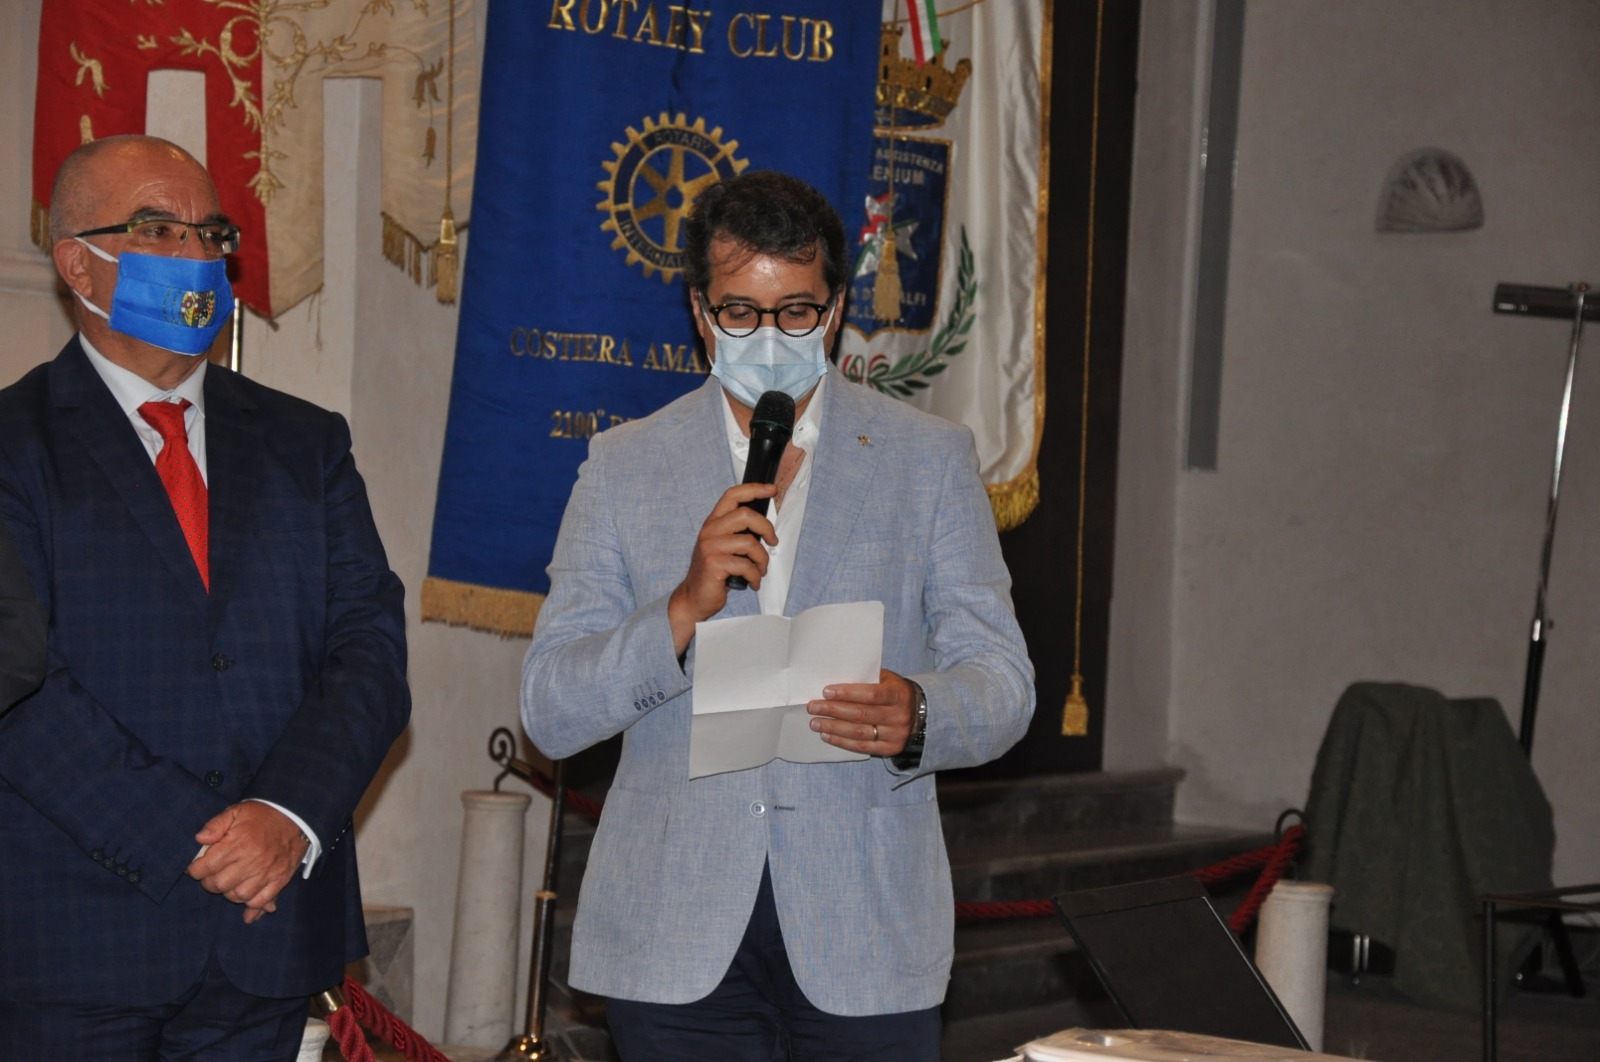 Rotary Club Costiera Amalfitana Evento